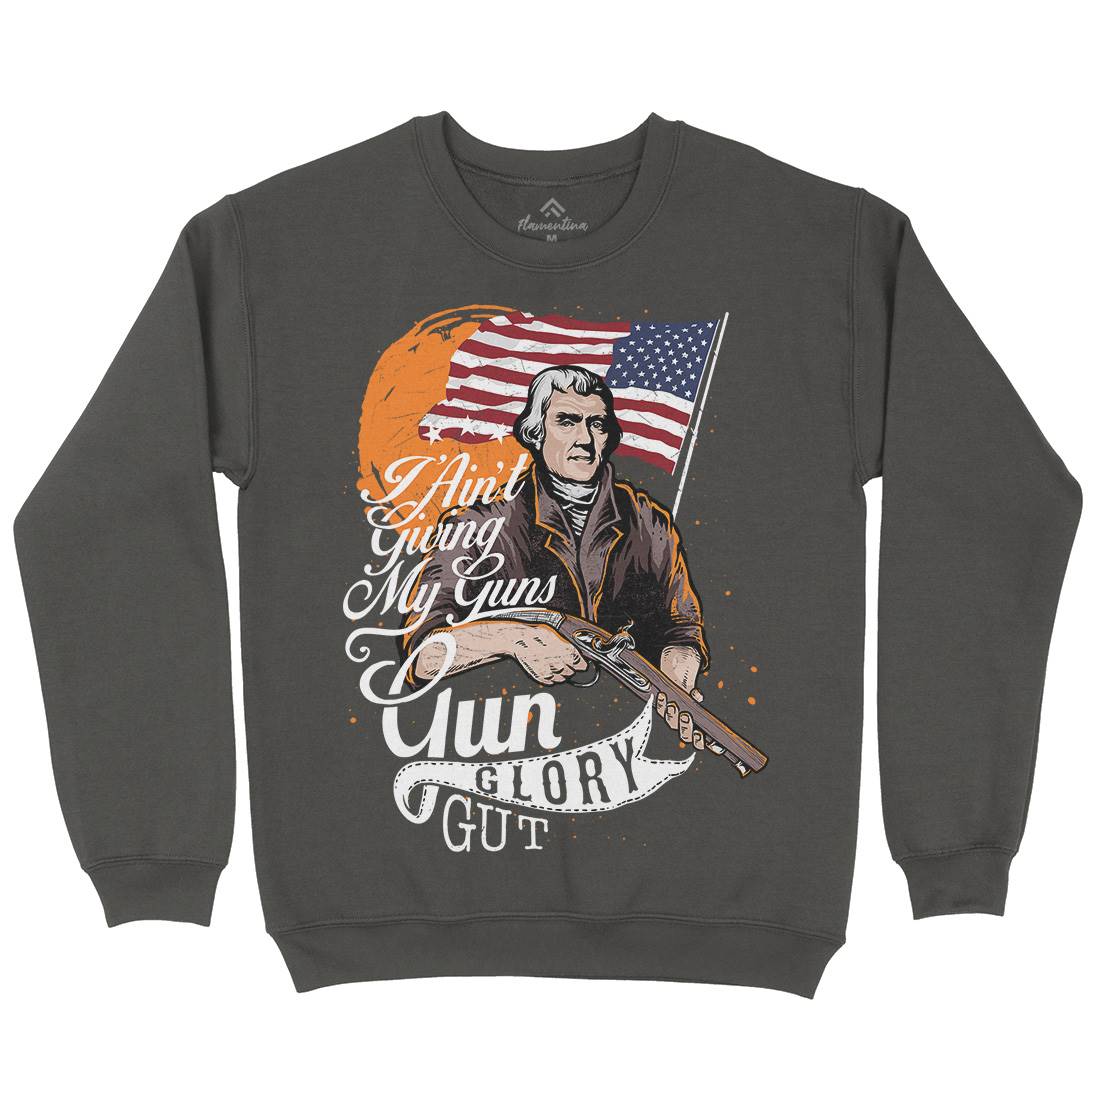 Gun Glory Gut Mens Crew Neck Sweatshirt American C940